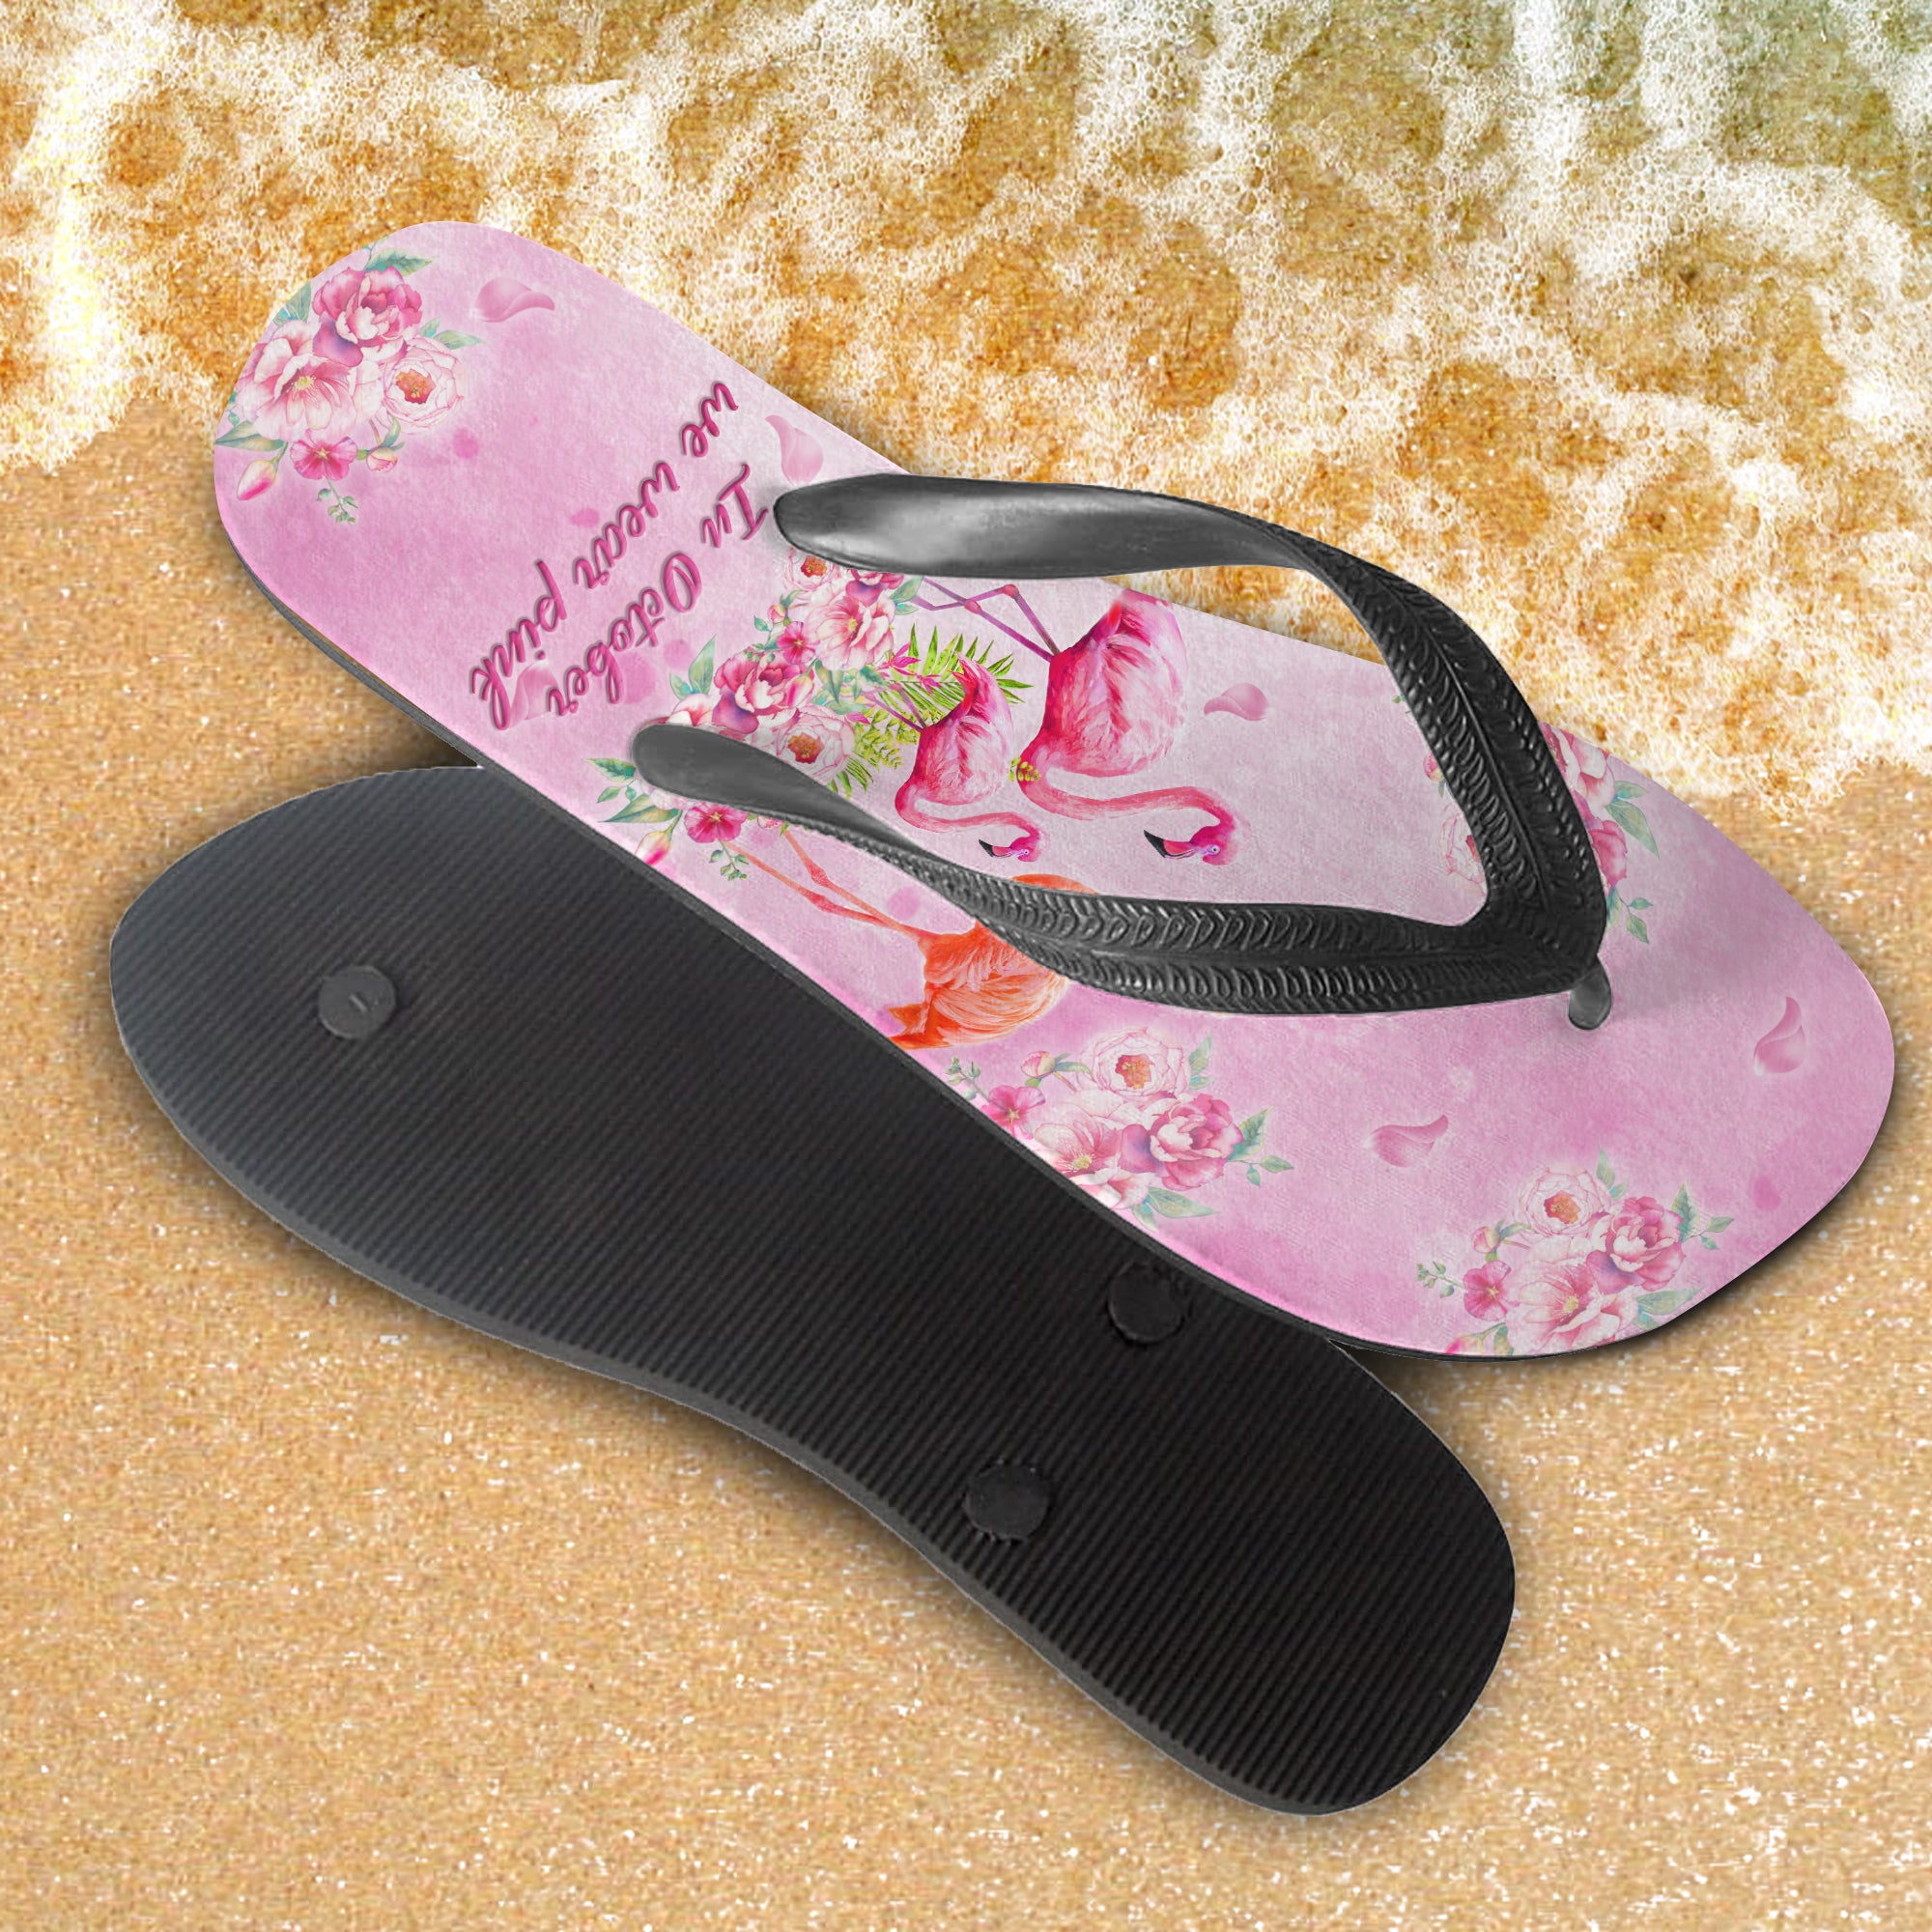 Custom Flip Flops - Flamingo - Fuly 14